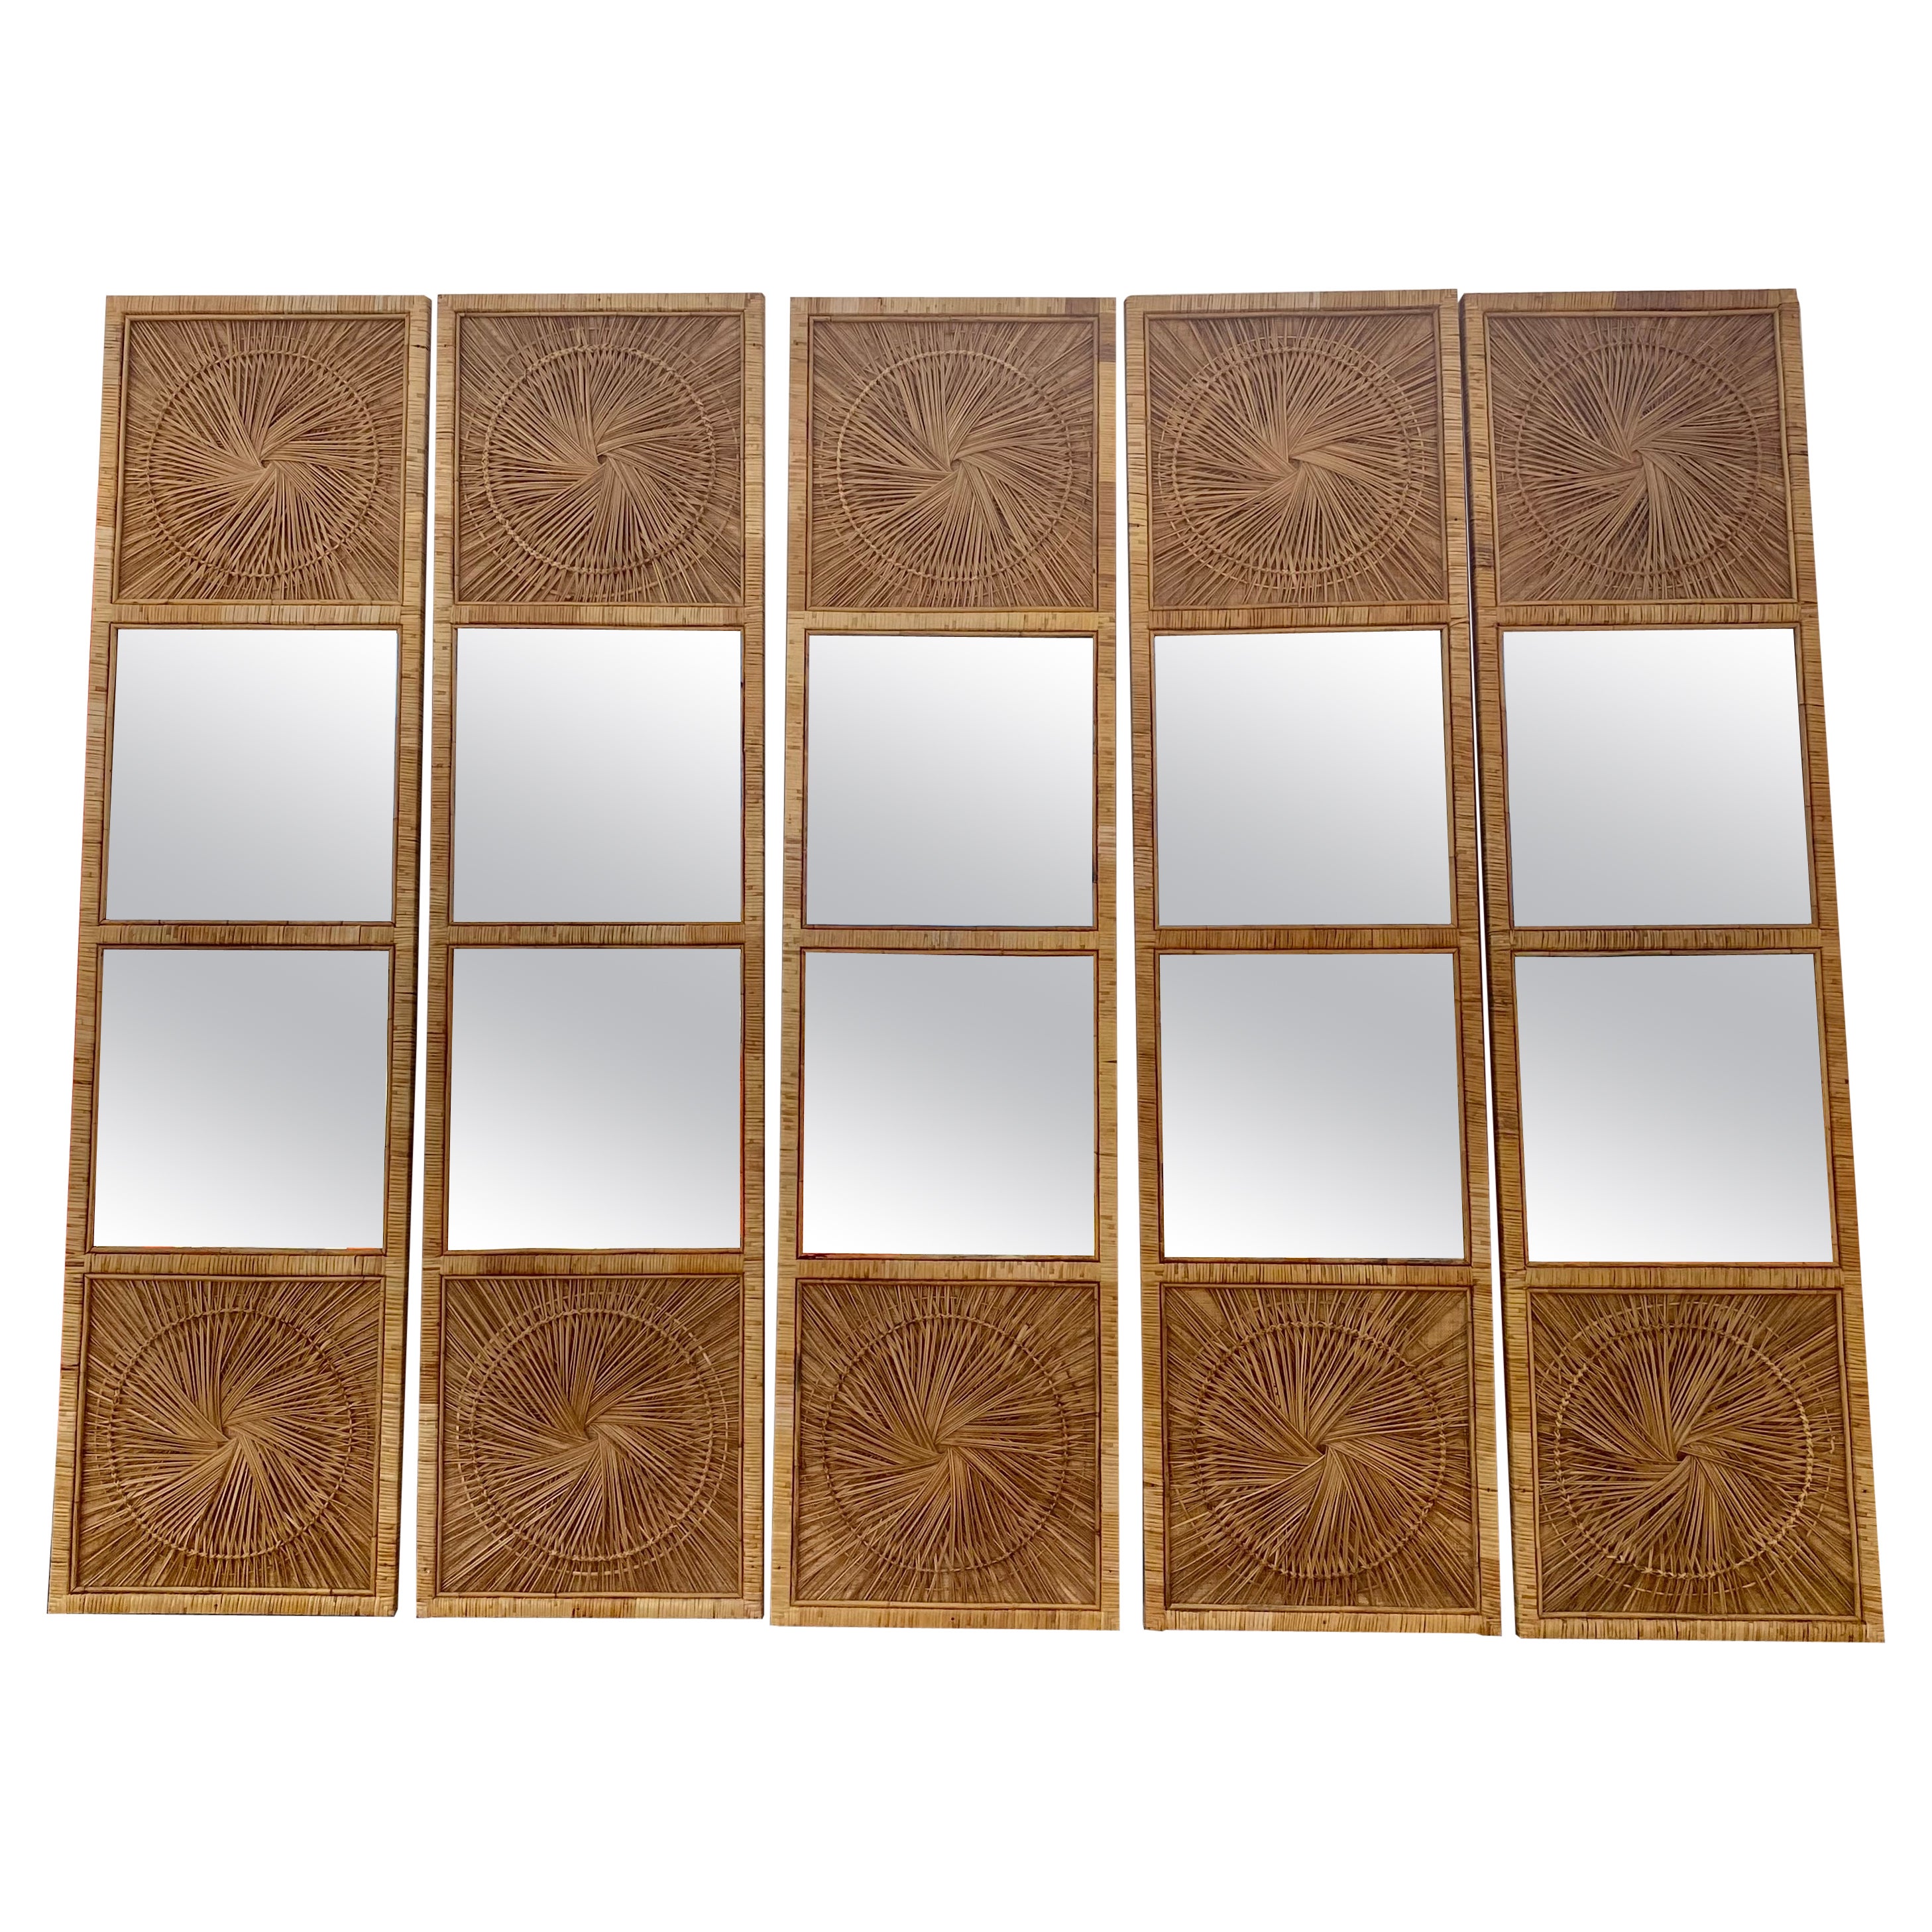 1970s Monumental Rattan Wicker Sunburst Wall Floor Mirror Panels For Sale